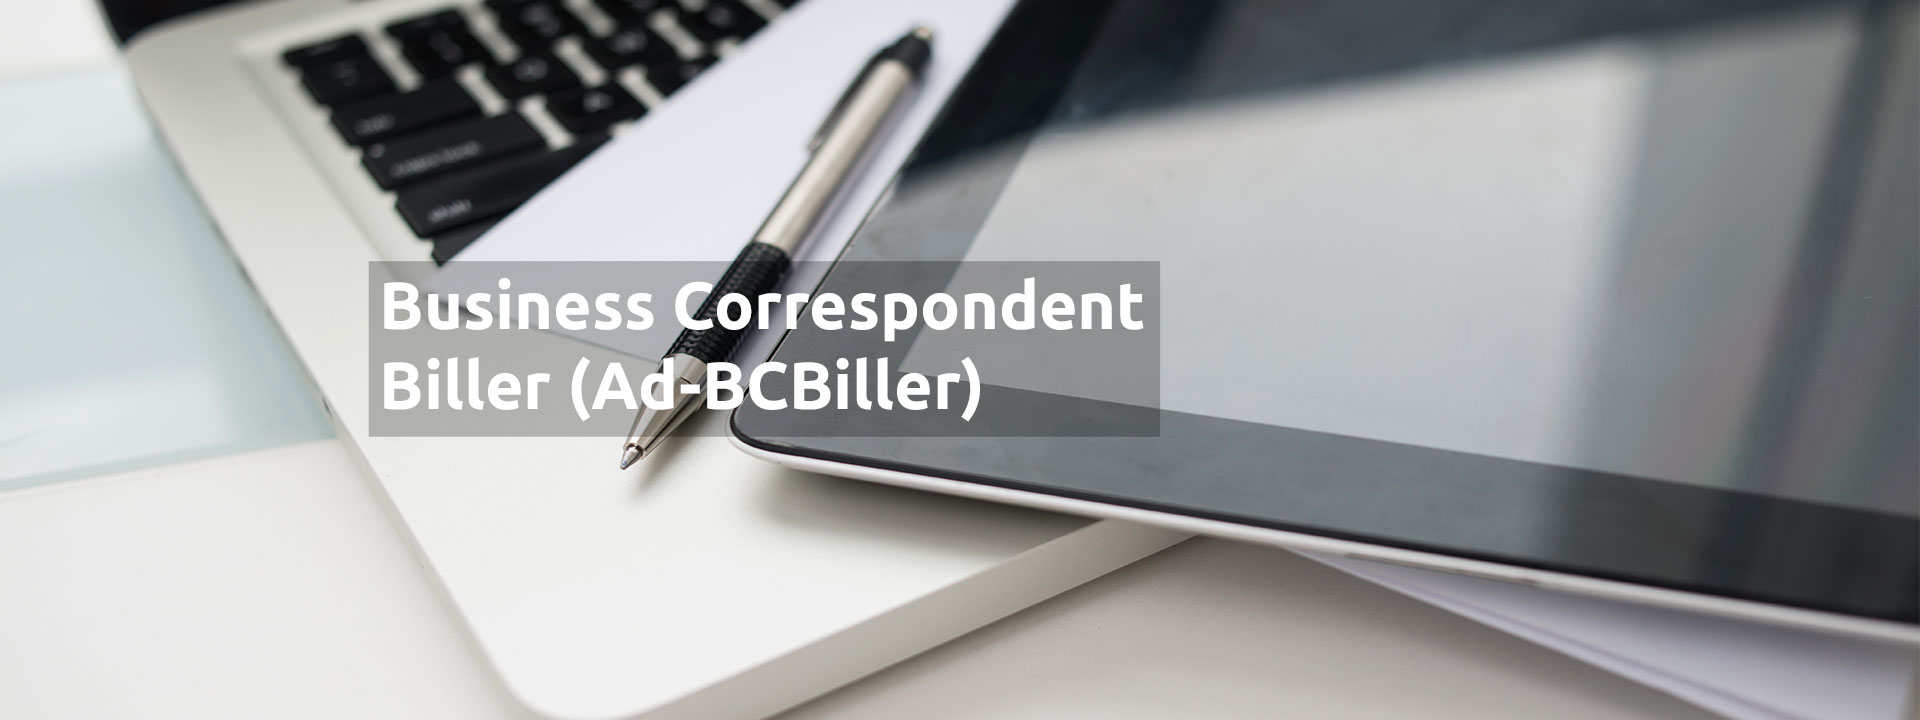 Ad-Business Correspondent Biller